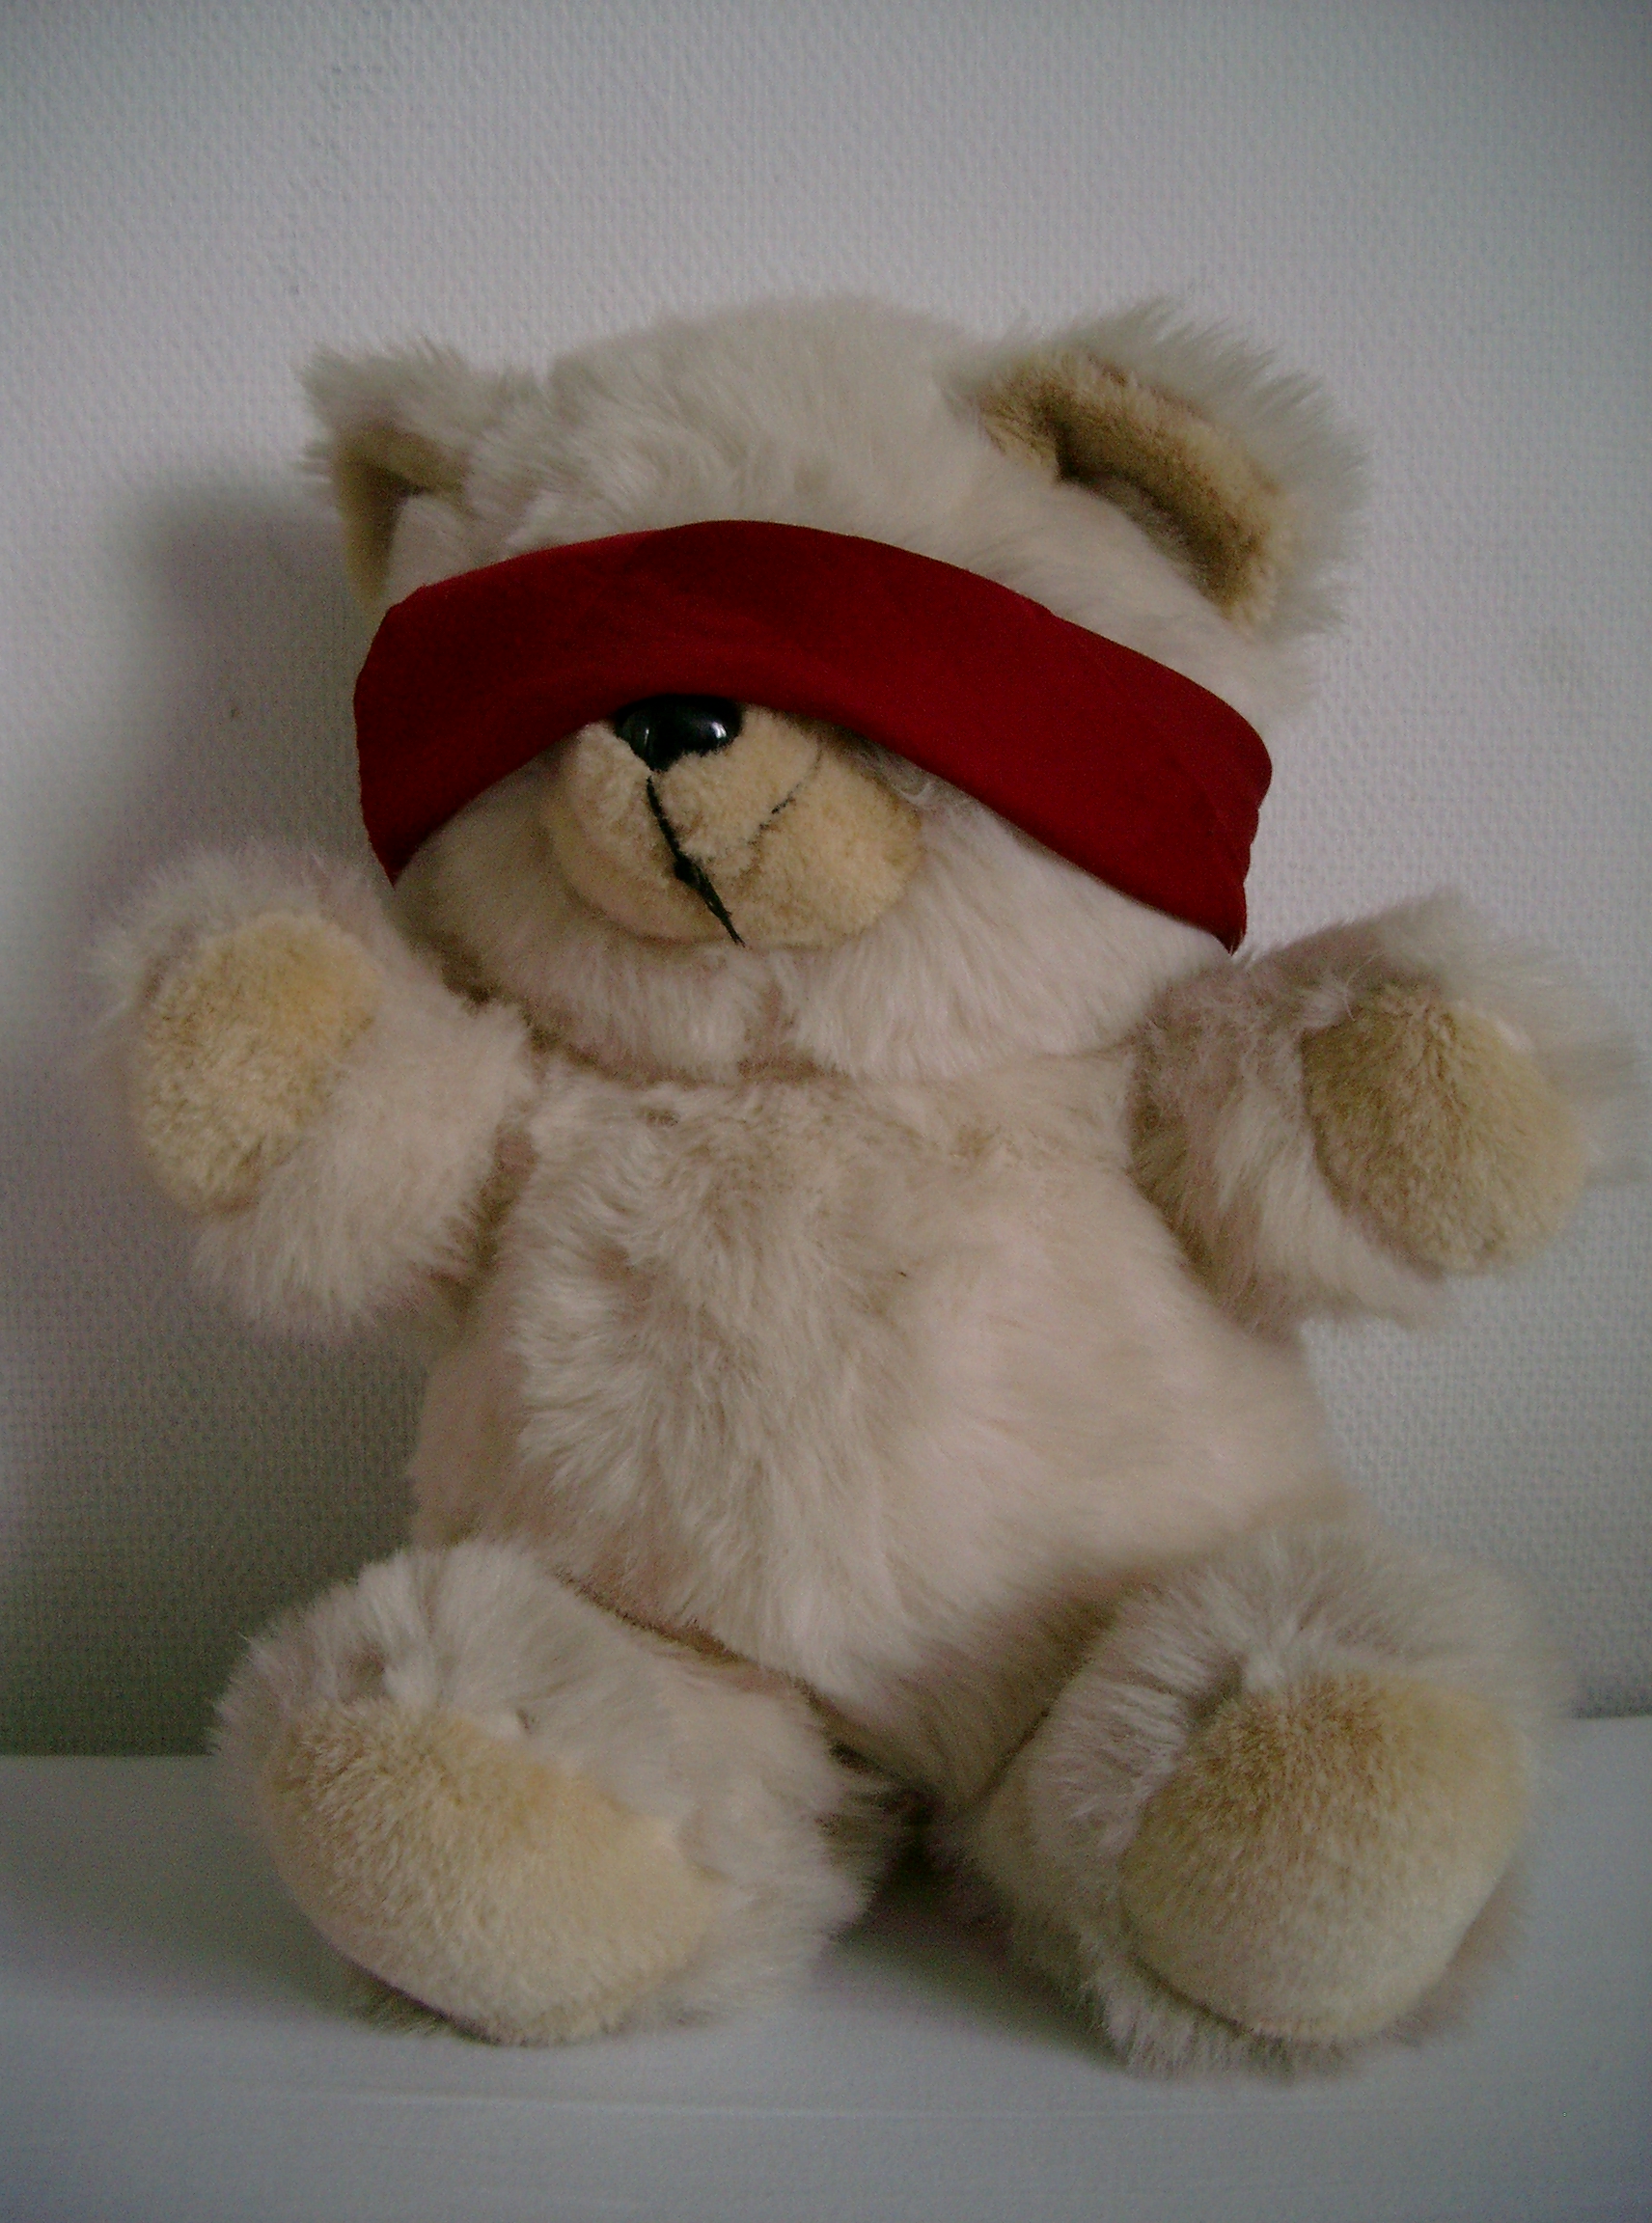 Blindfolded Teddy 2